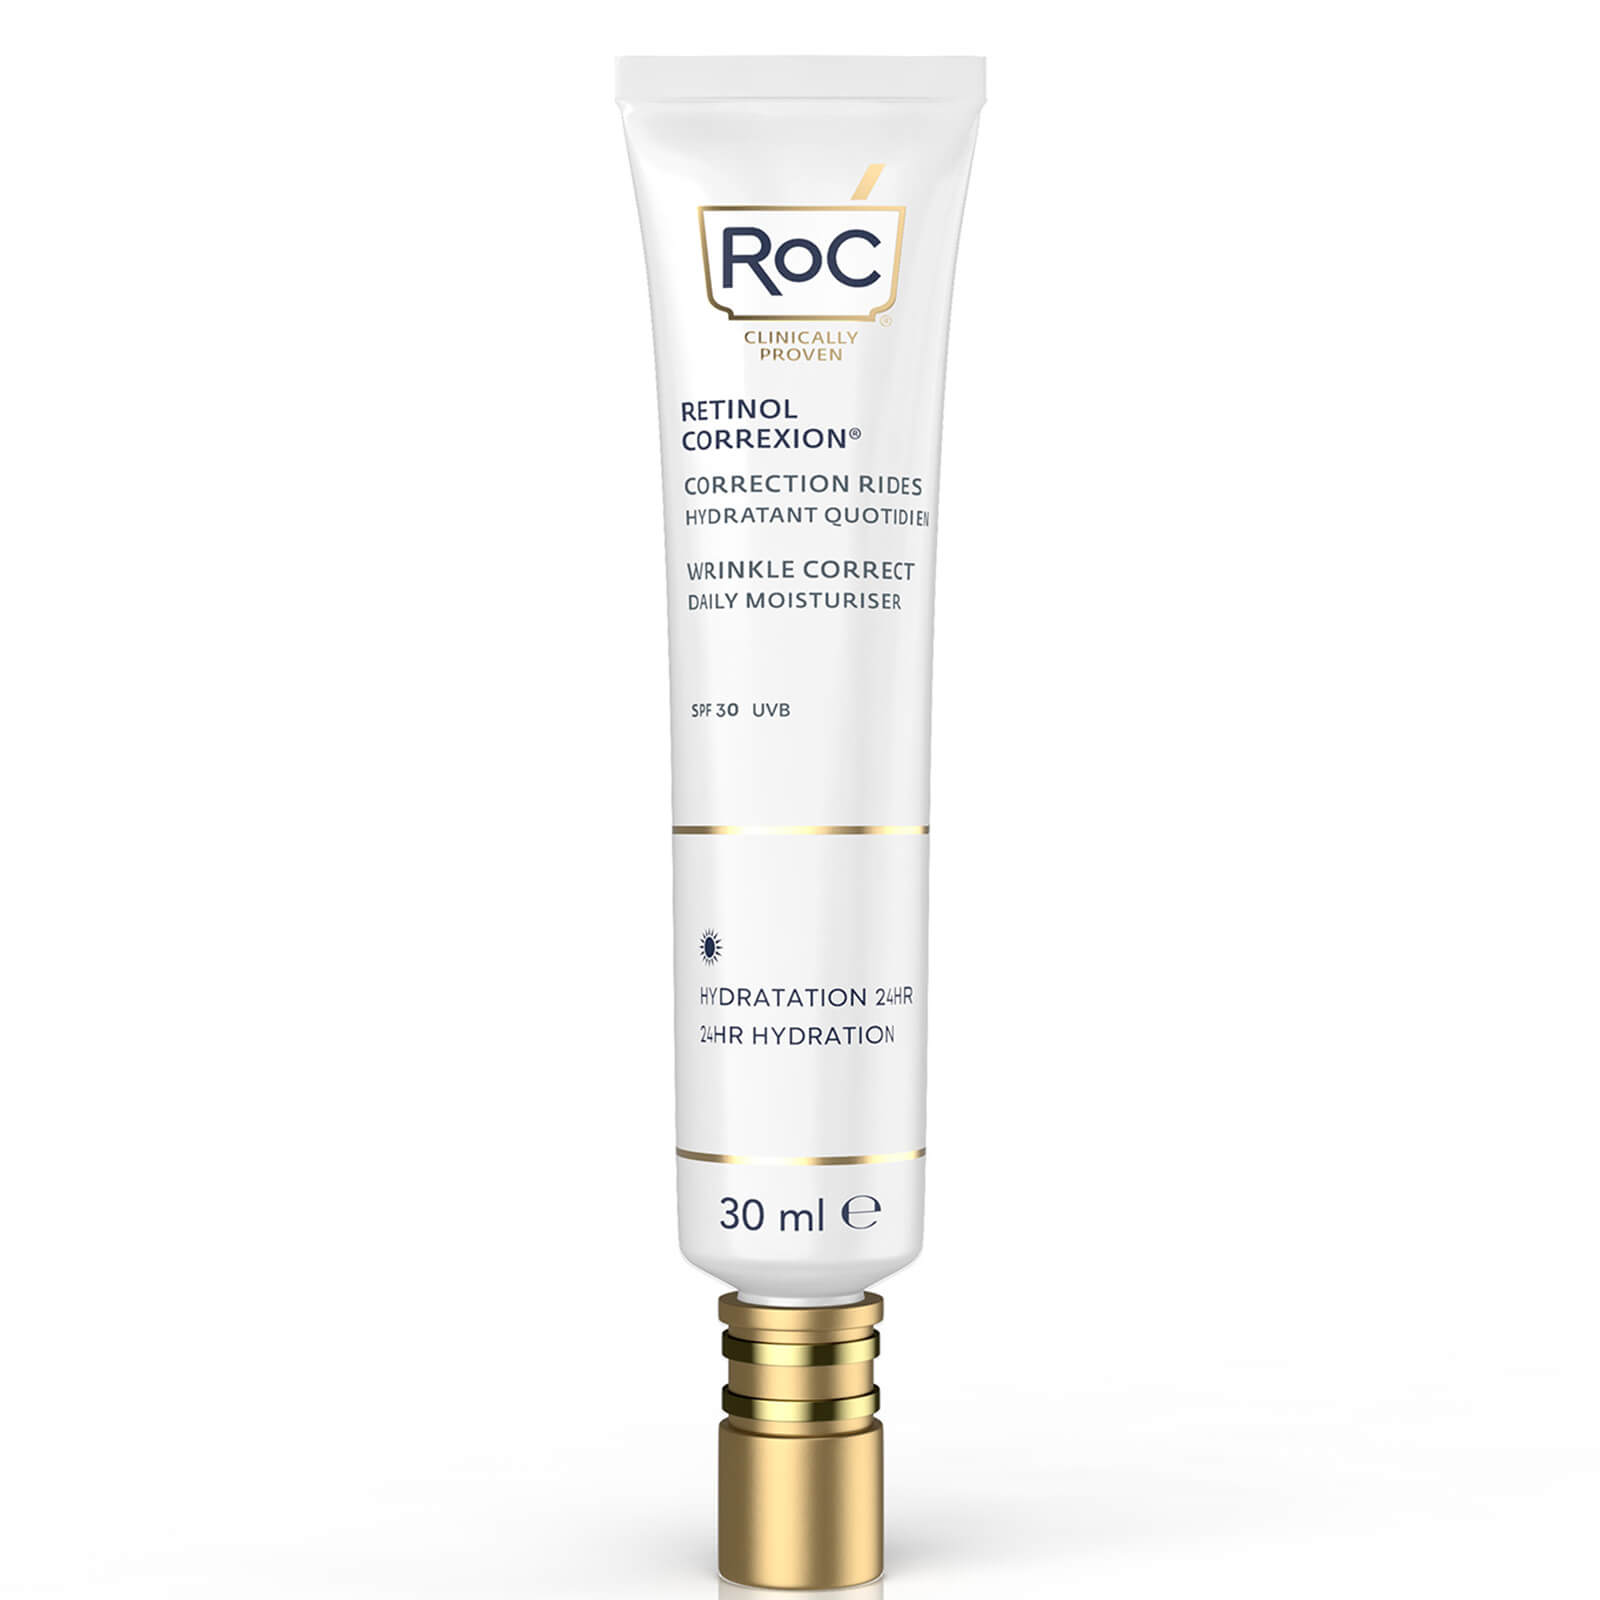 RoC Skincare RoC Retinol Correxion Wrinkle Correct Daily Moisturiser SPF30 30ml